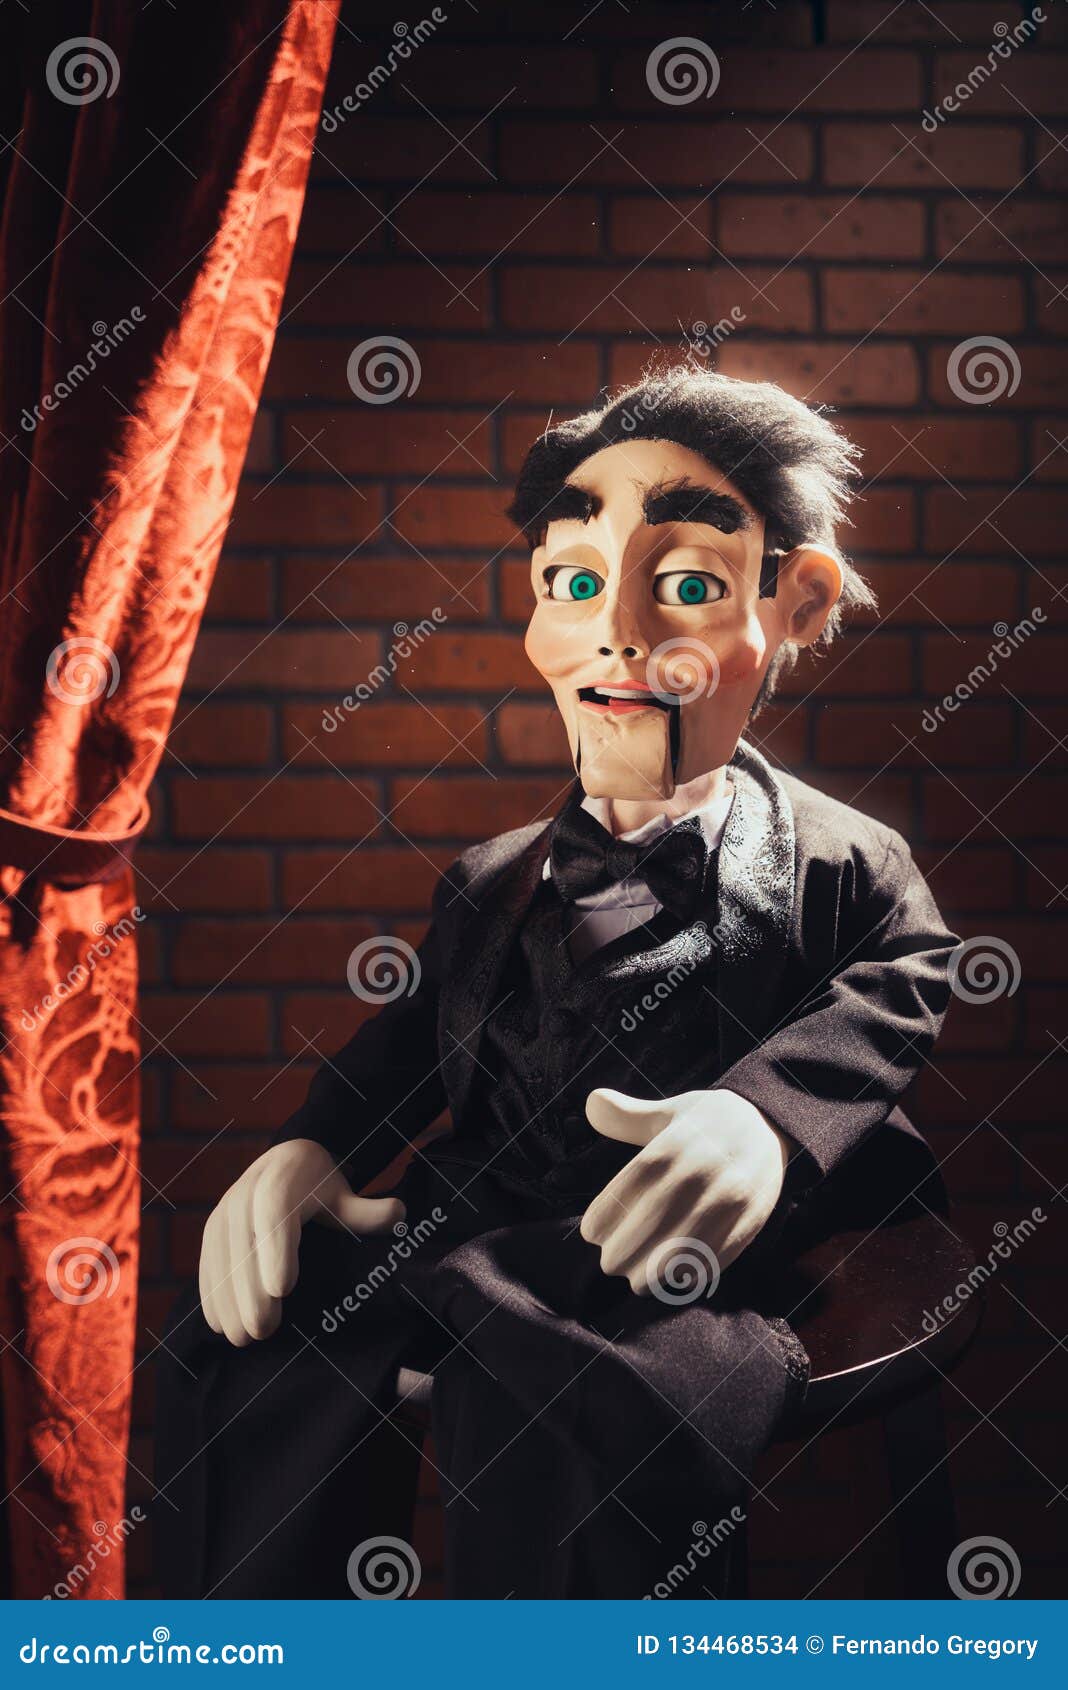 creepy wooden doll